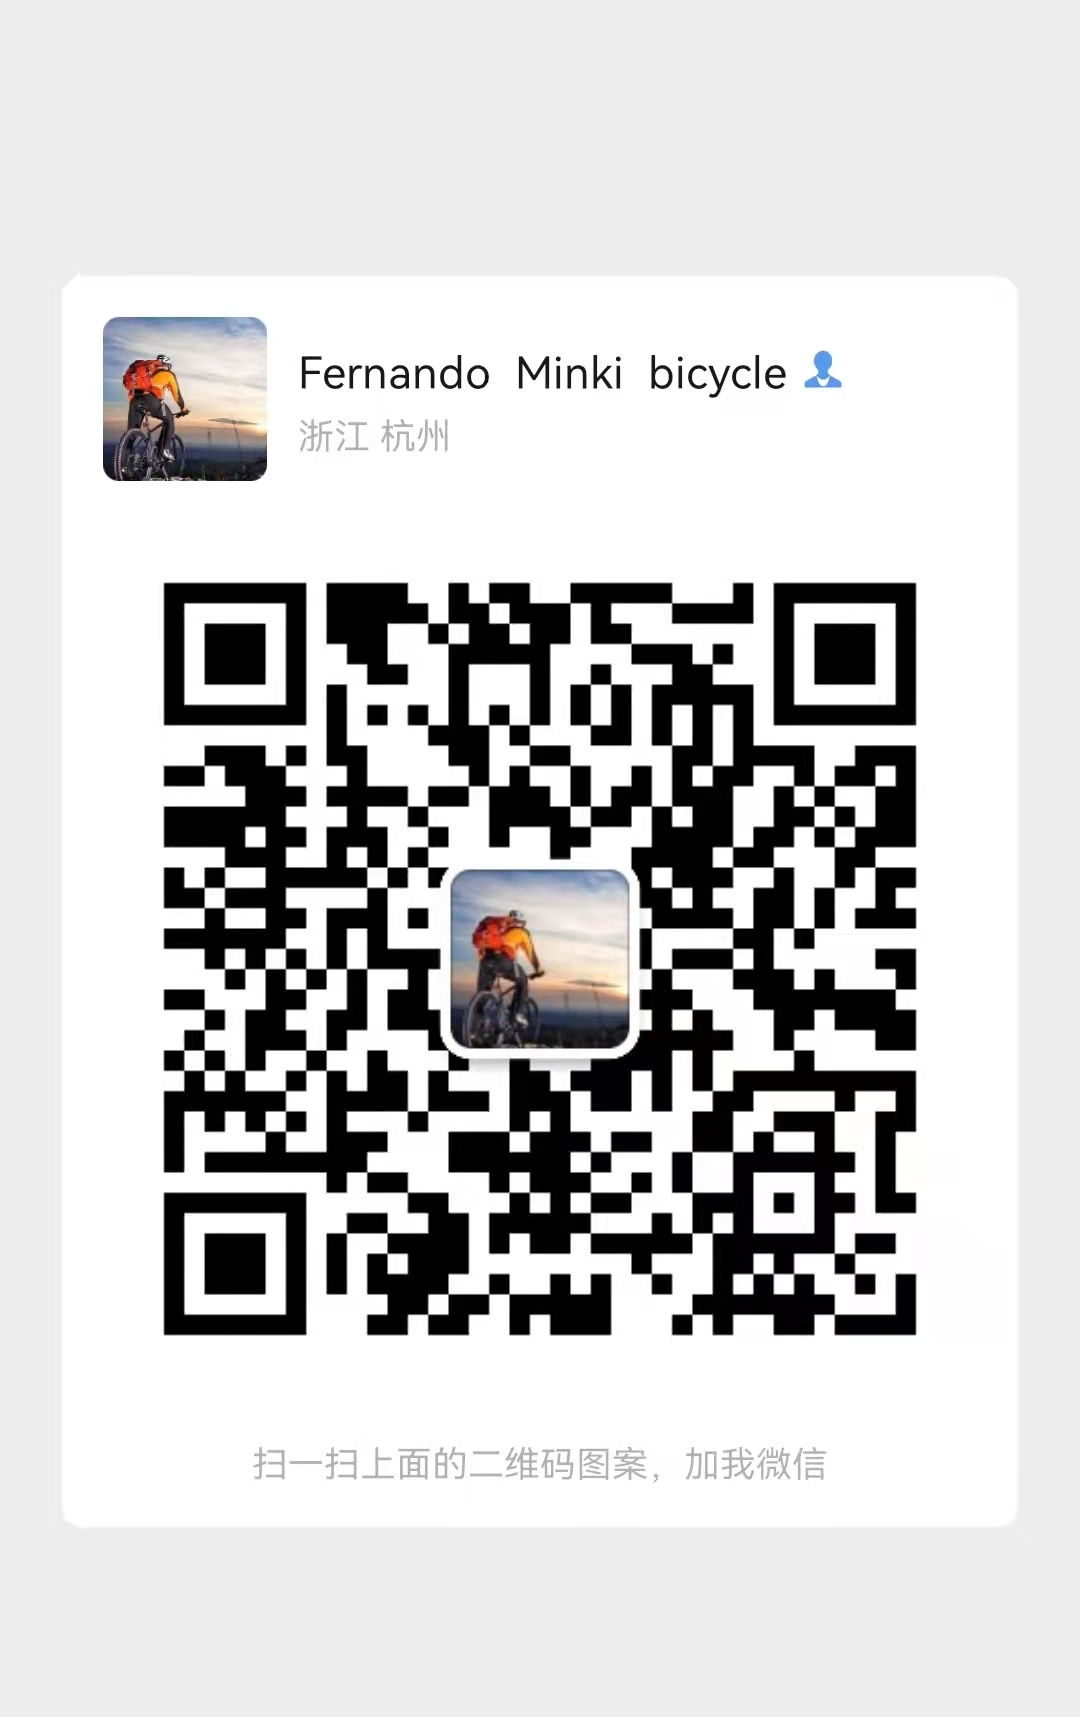 Hangzhou Minki Bicycle Co., Ltd